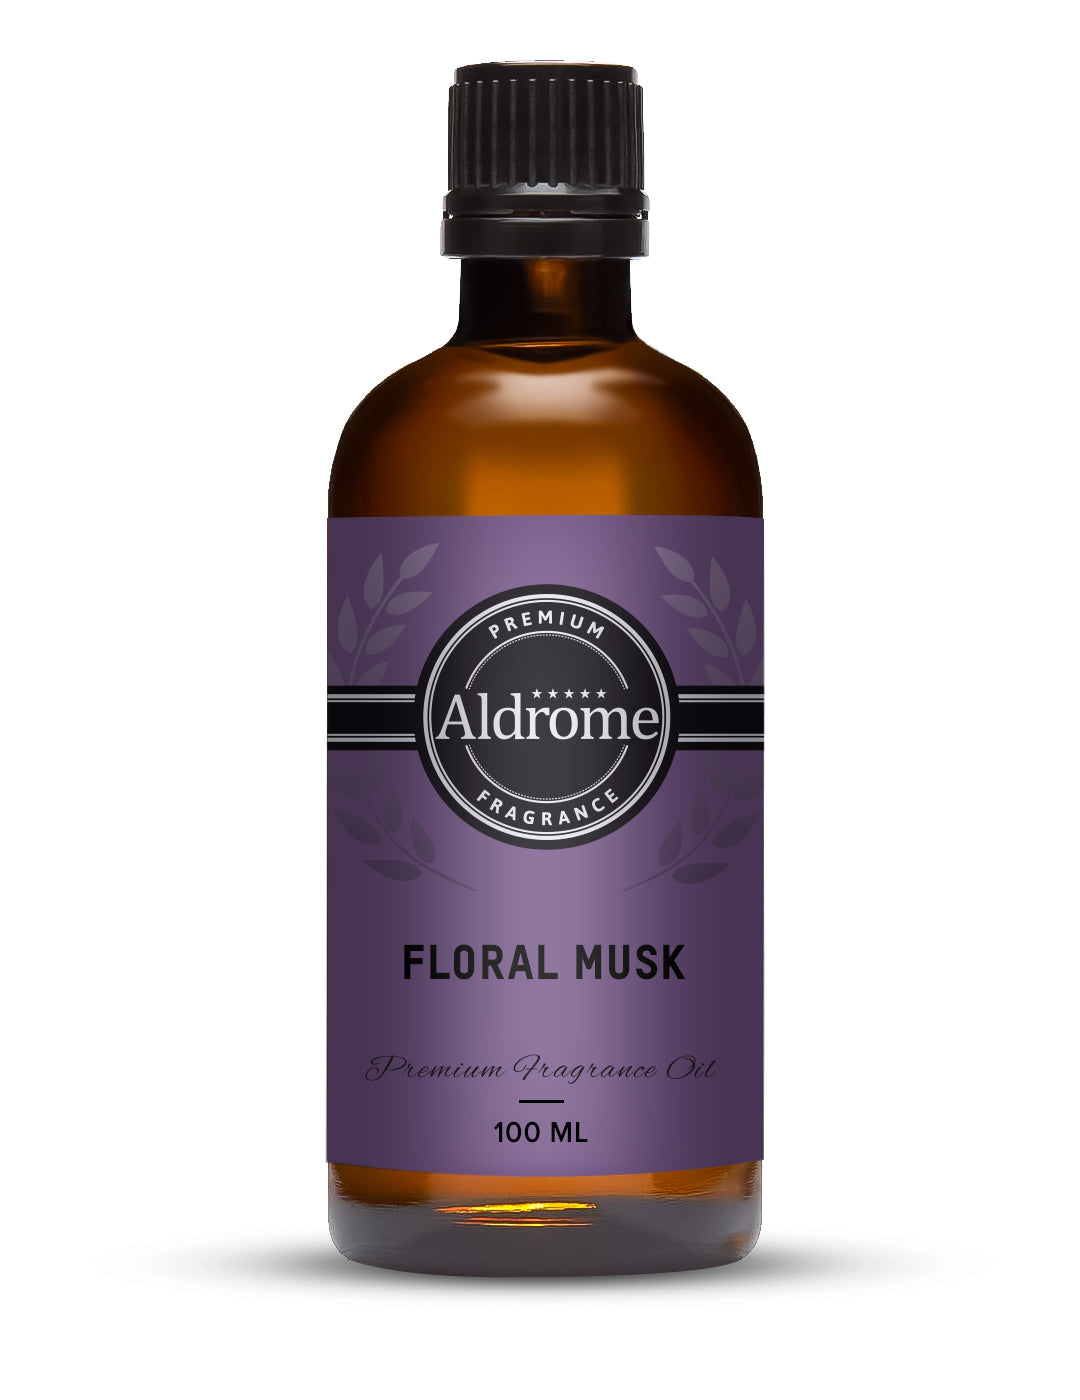 Floral Musk Fragrance Oil - 100ml | Buy Floral Musk Fragrance Oil | Aldrome Premium Fragrance Oil